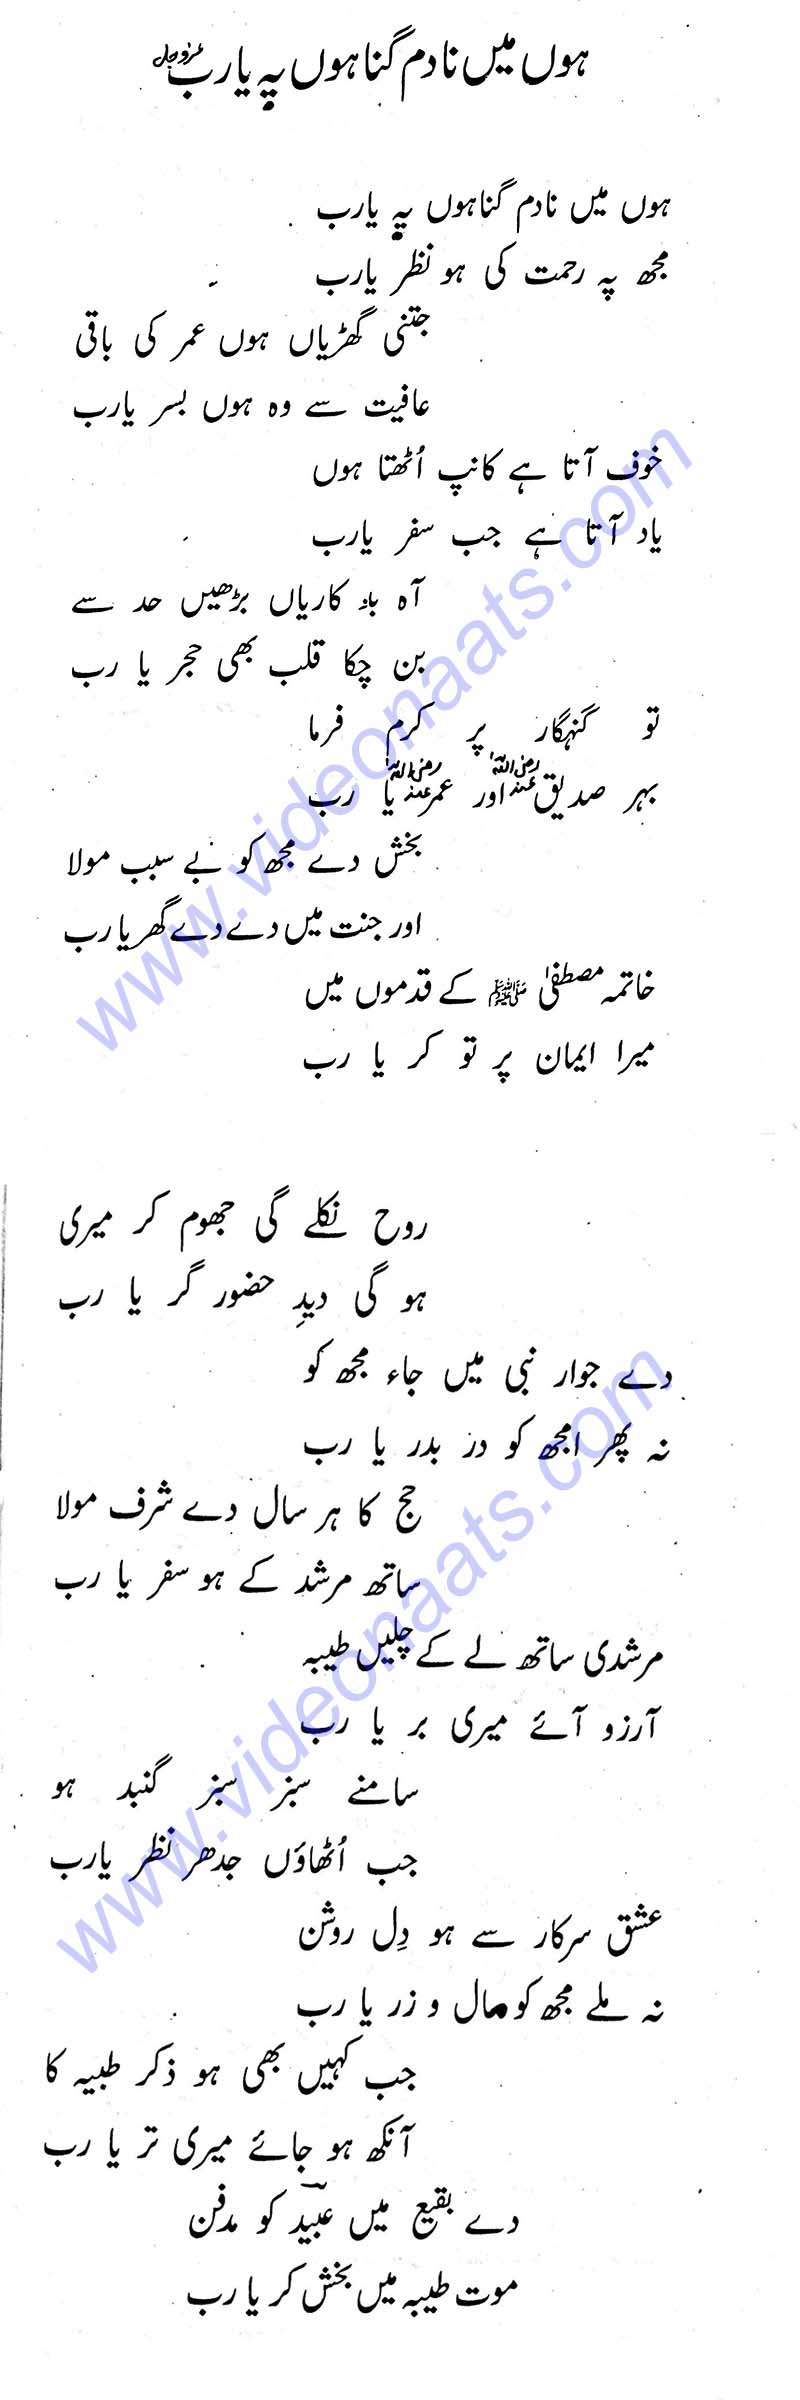 Hoon Mein Nadim Gunahoon Par Ya Rab Urdu Naat Lyrics